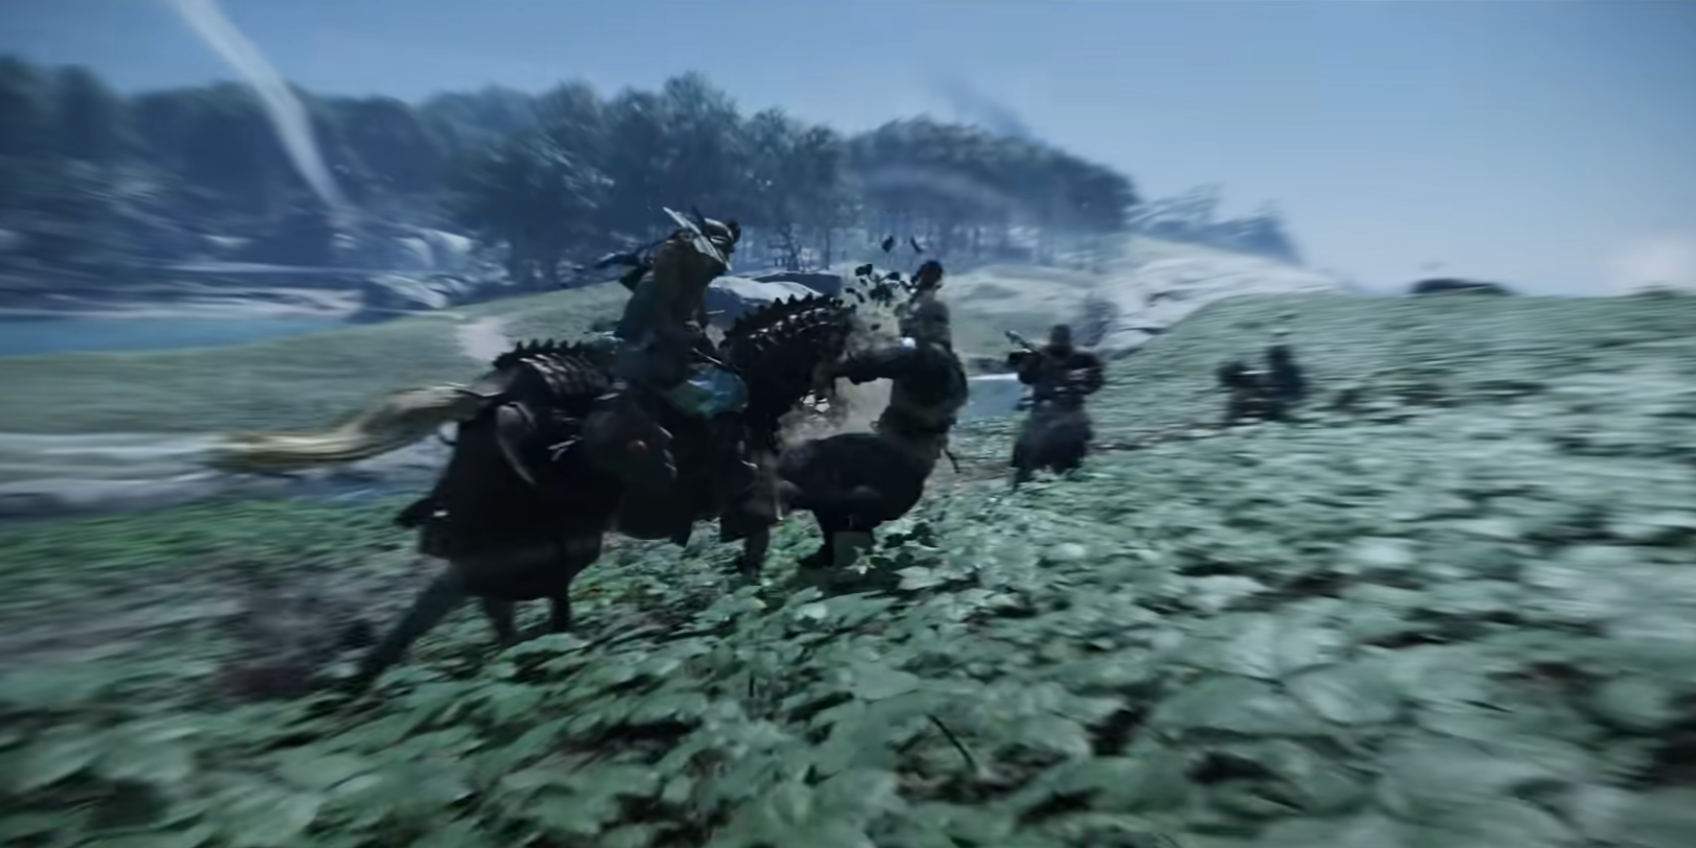 Jin running through enemies on horse back